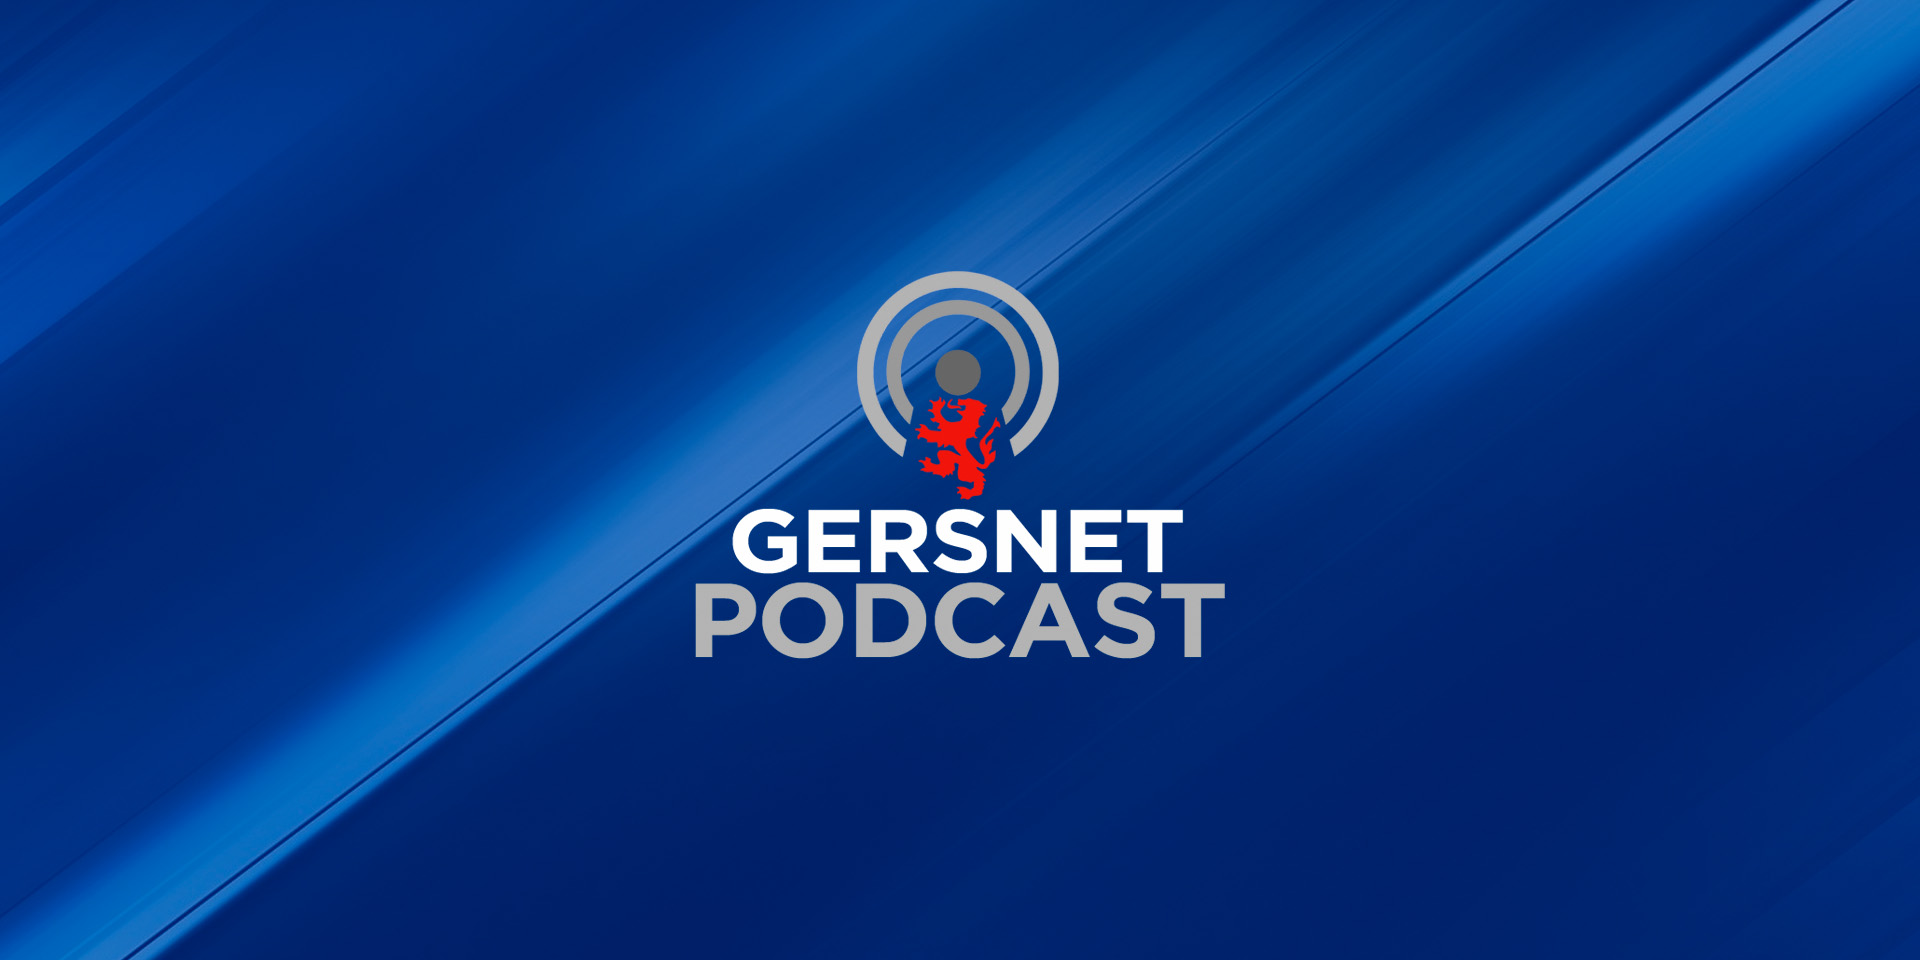 Gersnet Podcast 212 - A Small Step Forward